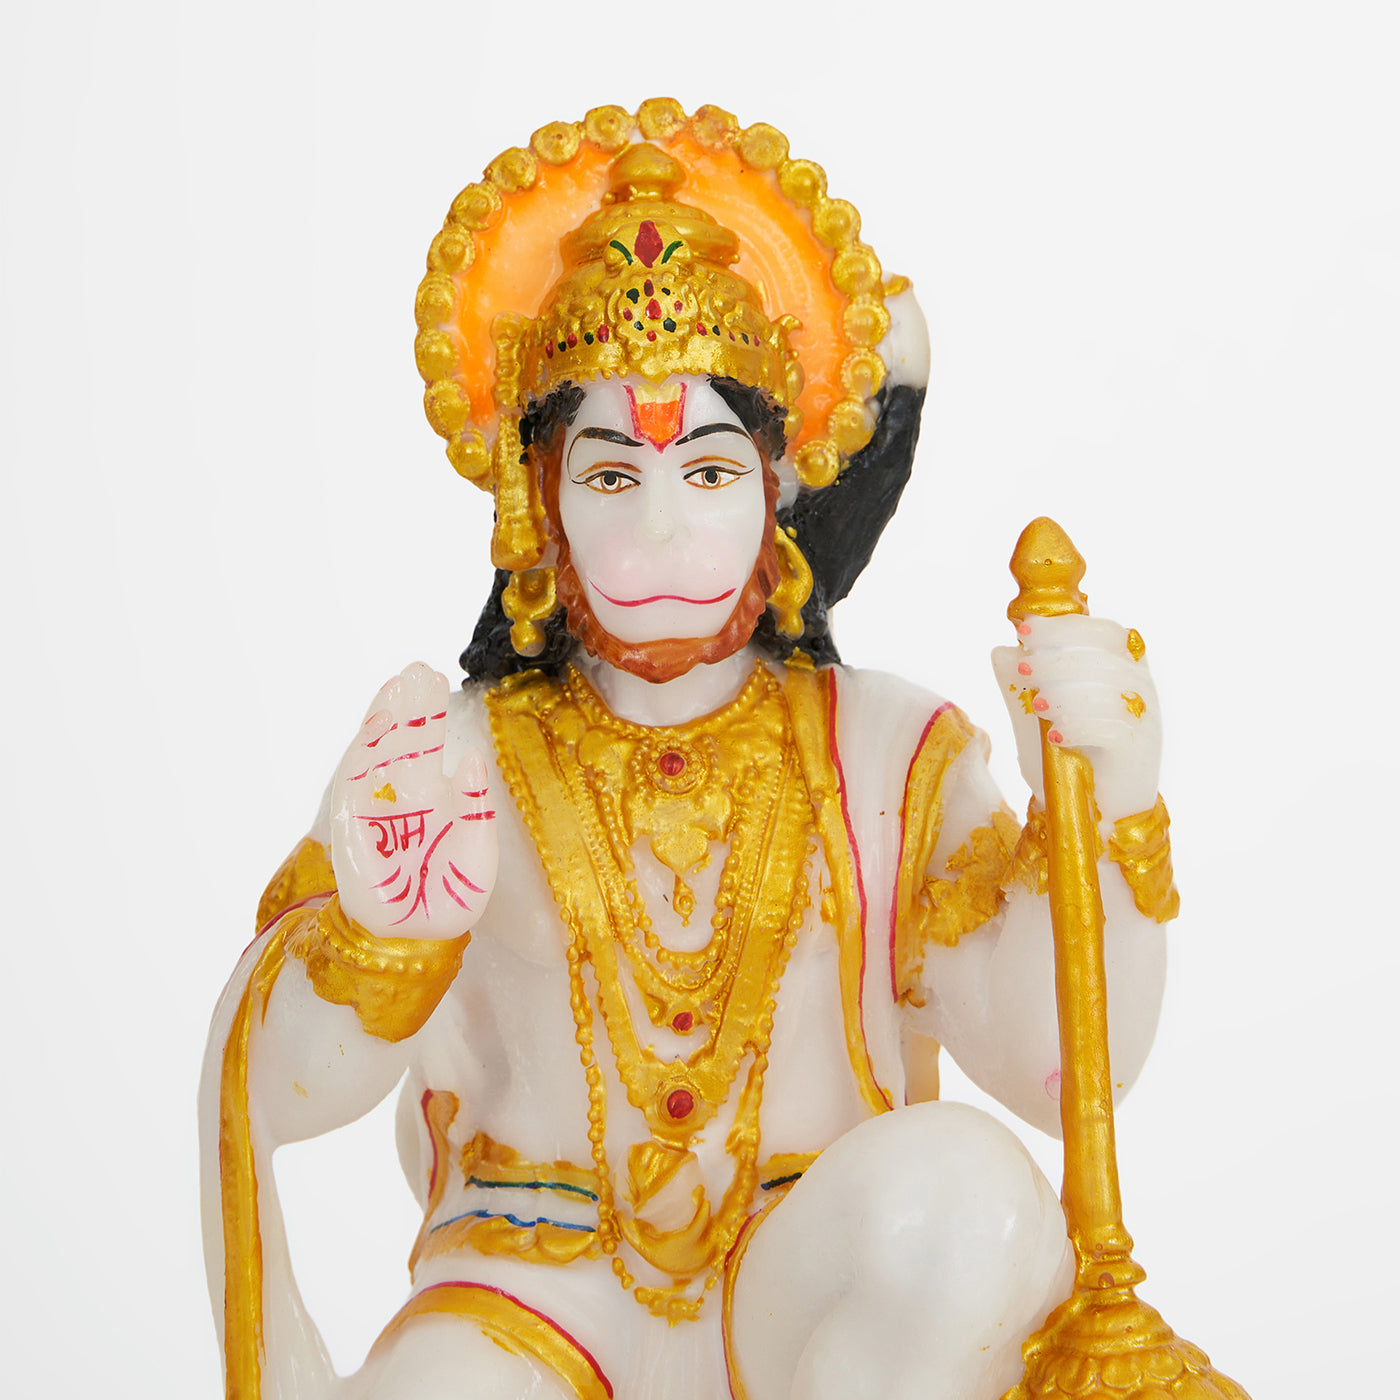 Ashirwad Anjaneya Lord Mahavir Hanuman| God Bajrangbali | Idol/Statue In Marble Dust